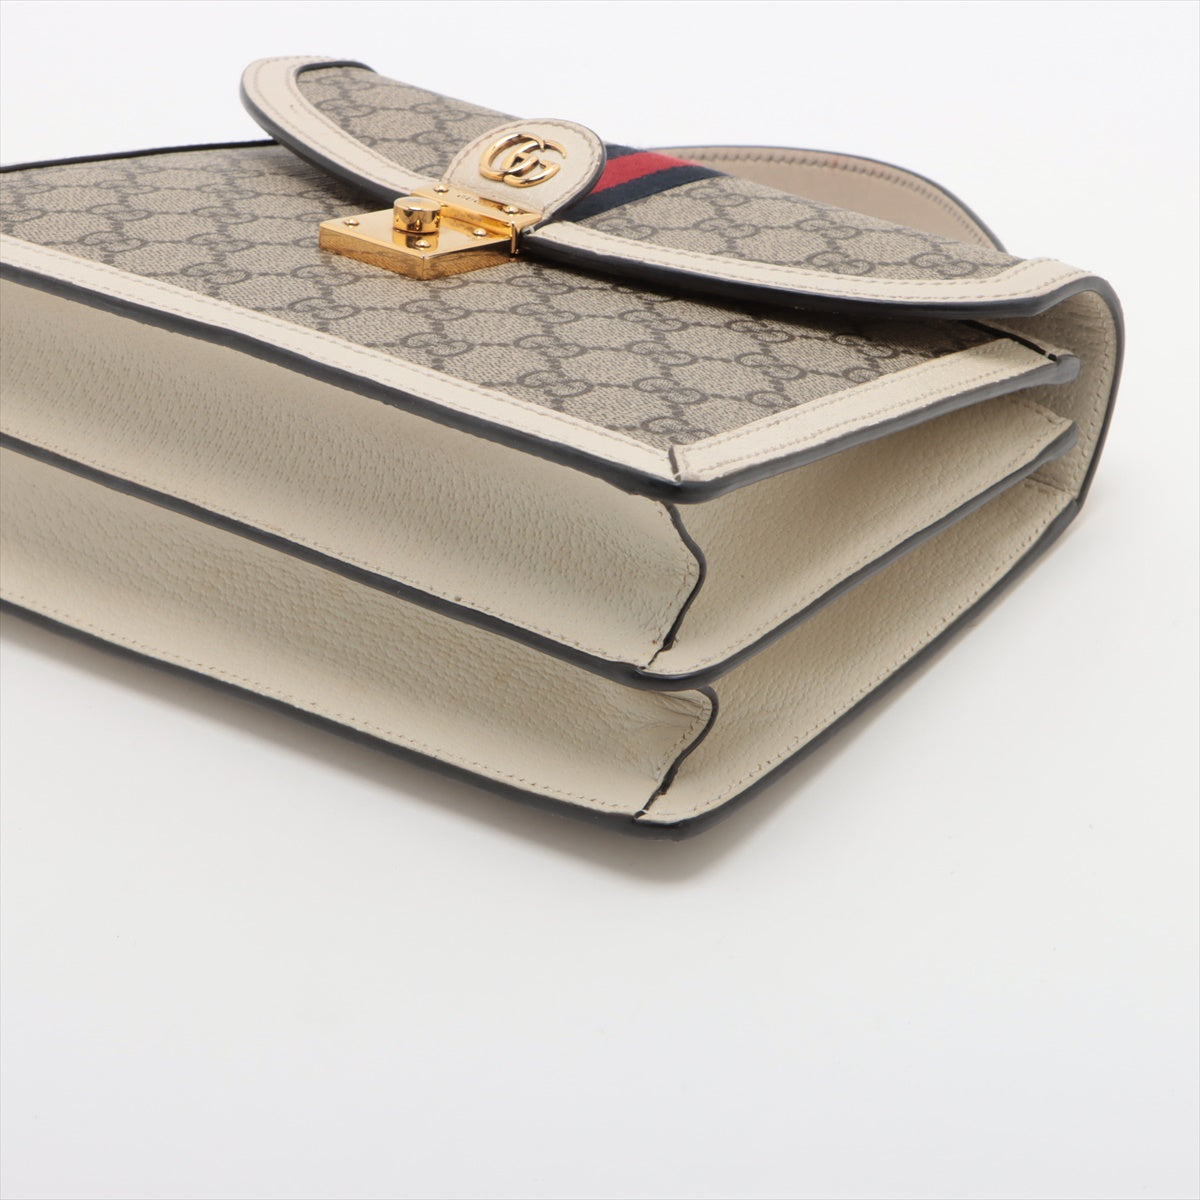 Gucci GG Supreme PVC & leather 2way handbag Beige x white 651055